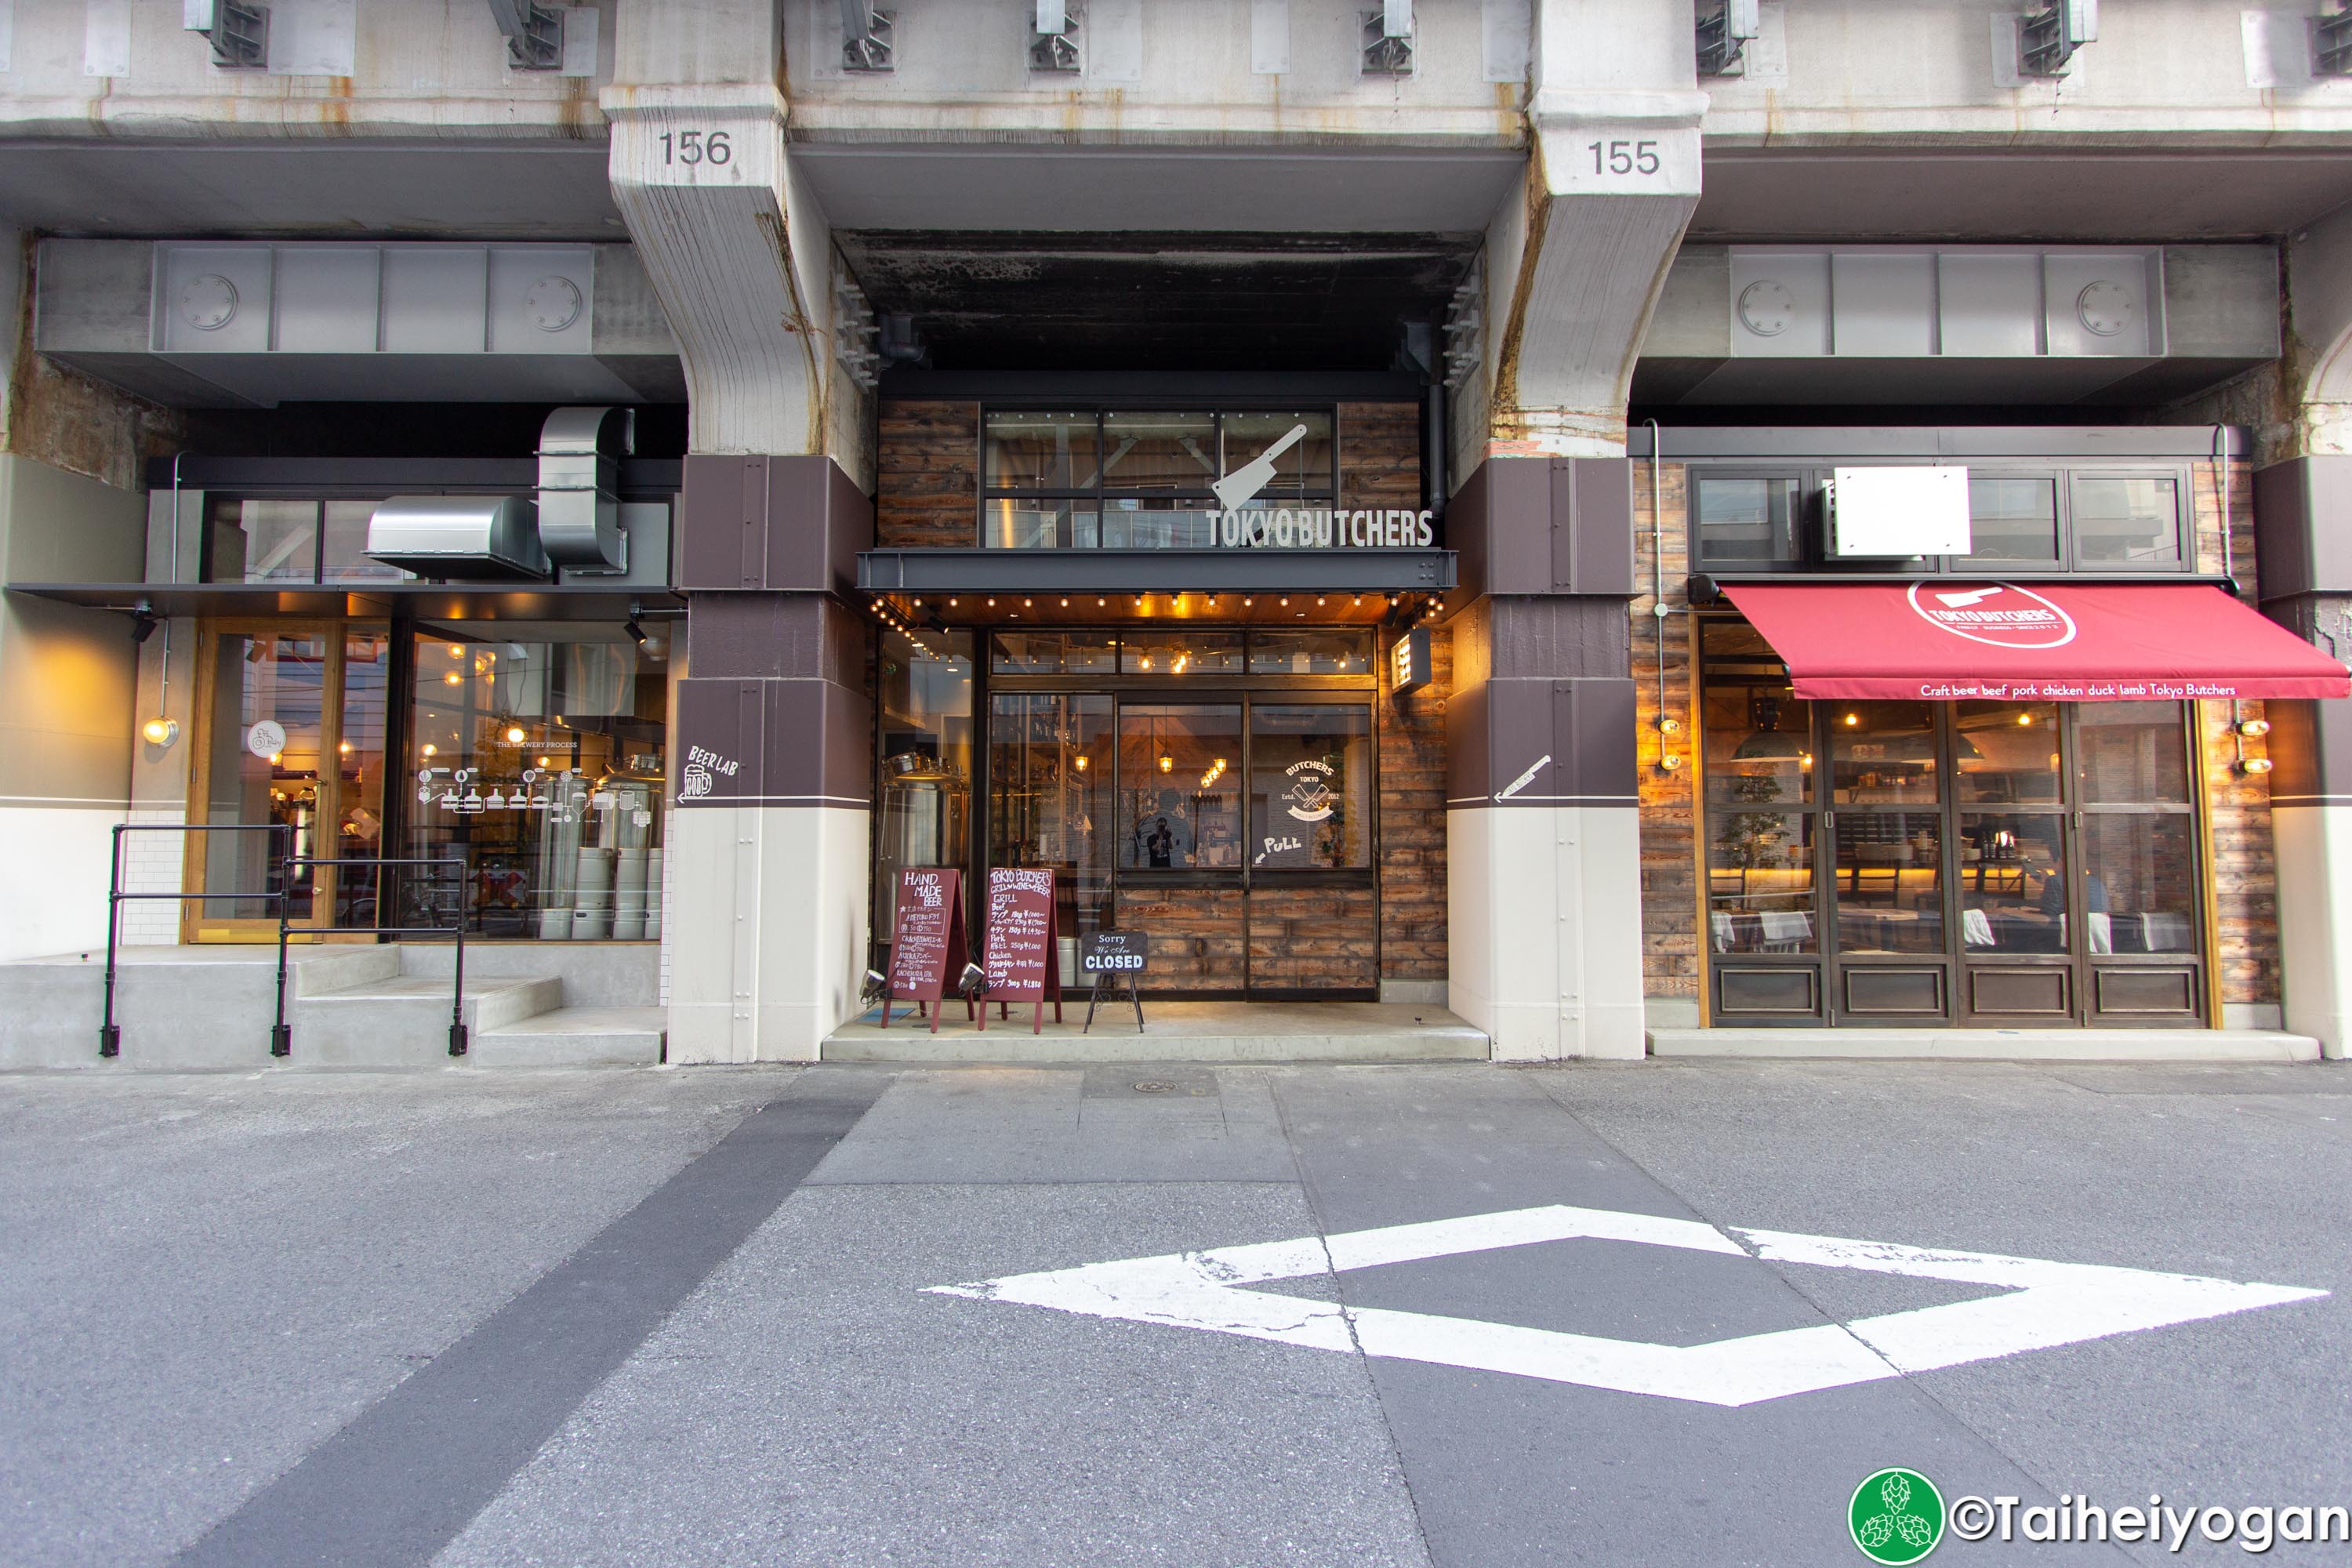 Tokyo Butchers & Okachi Beer Lab - Entrance